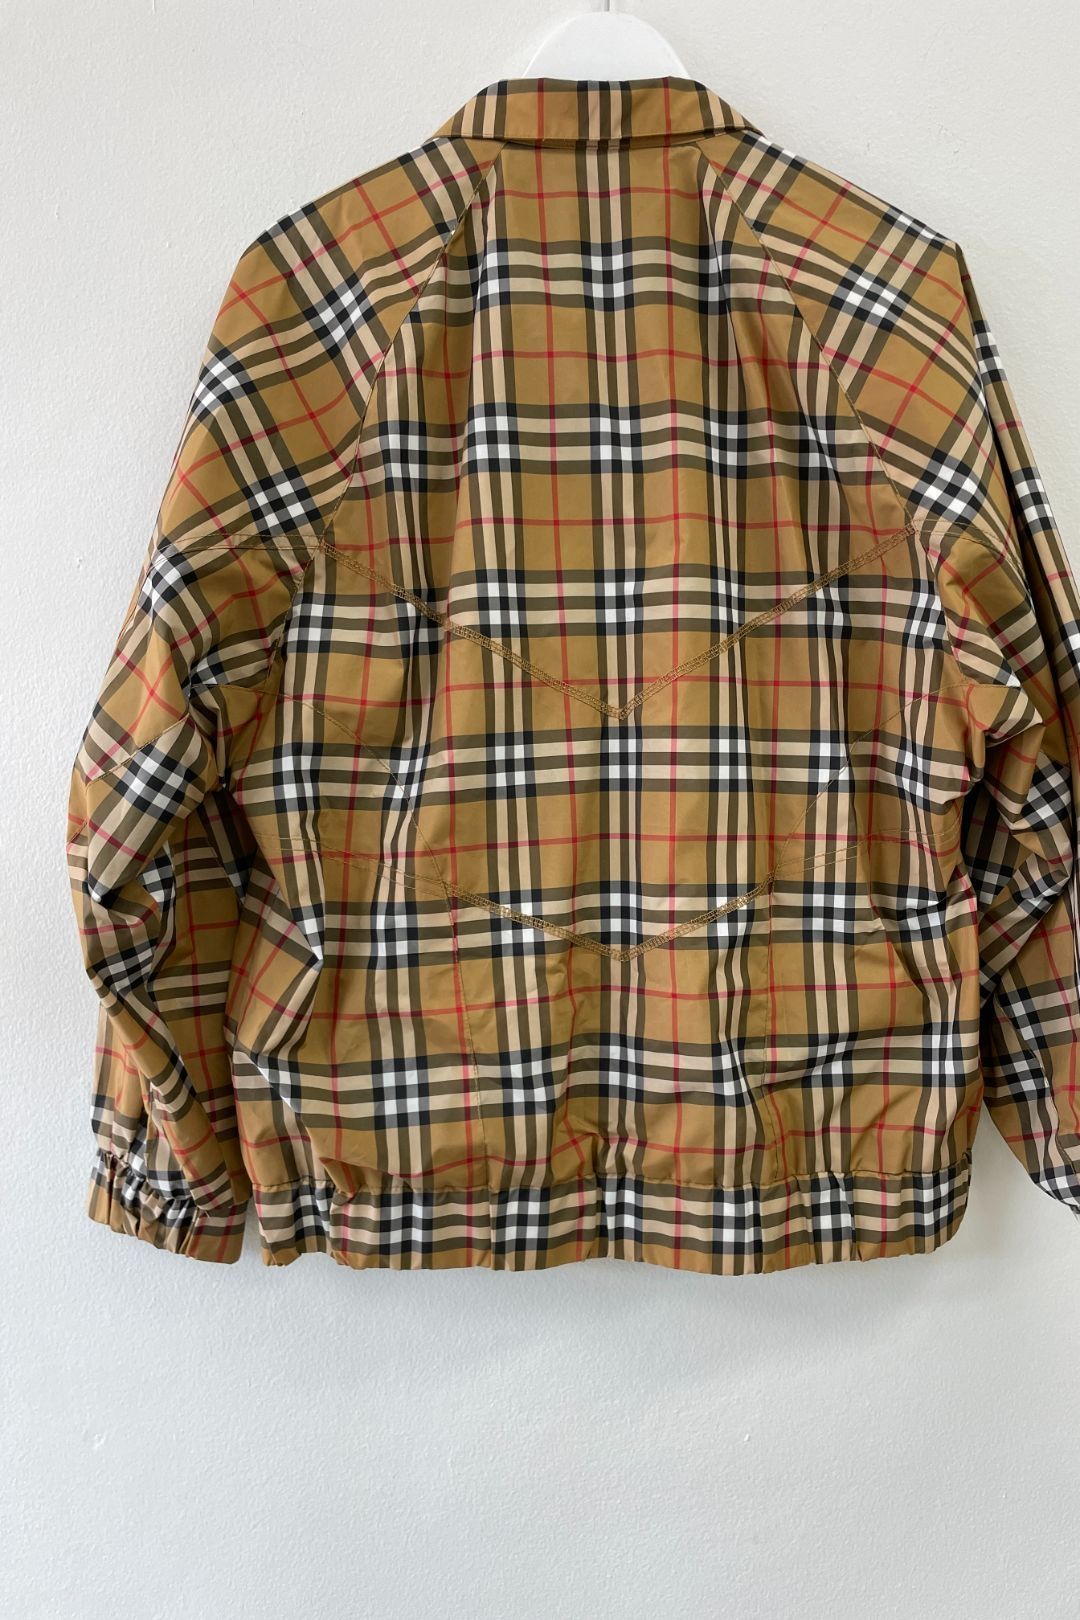 Burberry - Topstitch Detail Vintage Check Harrington Jacket